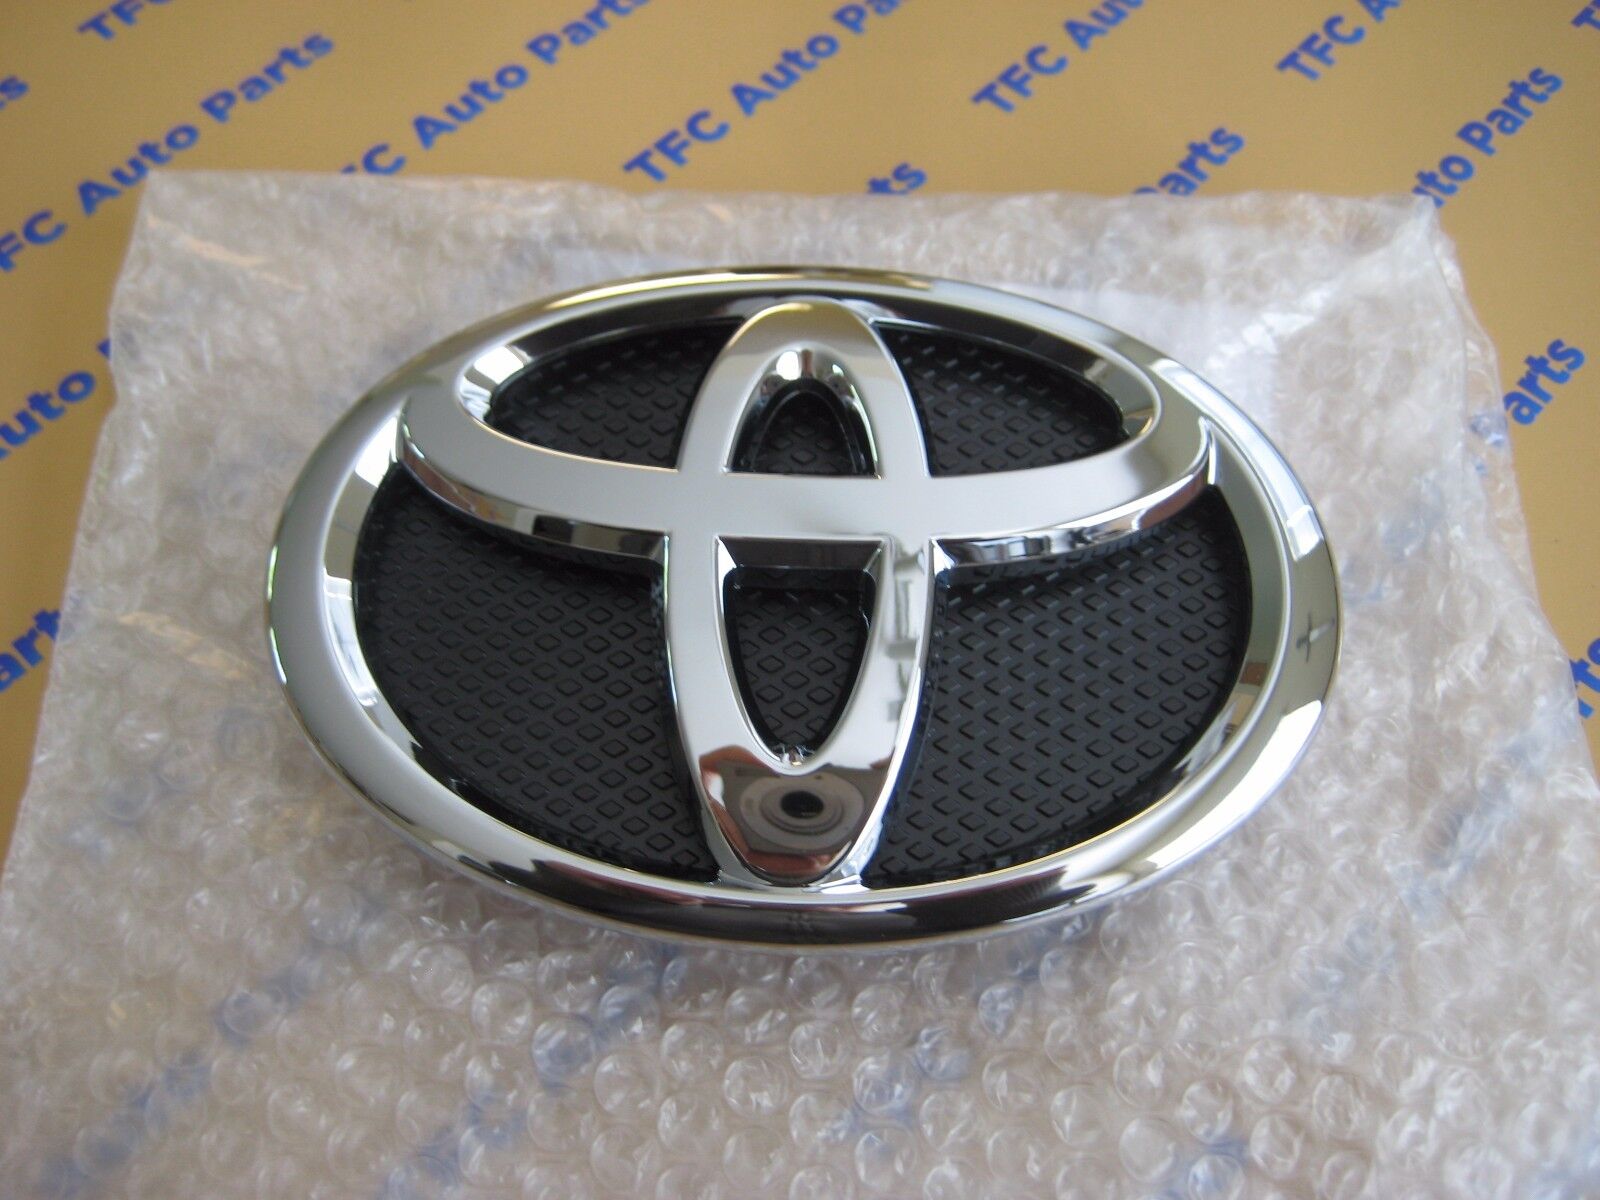 Toyota Yaris 4 Door Sedan Front Grill Emblem Genuine OEM New 2007-2016 Yaris